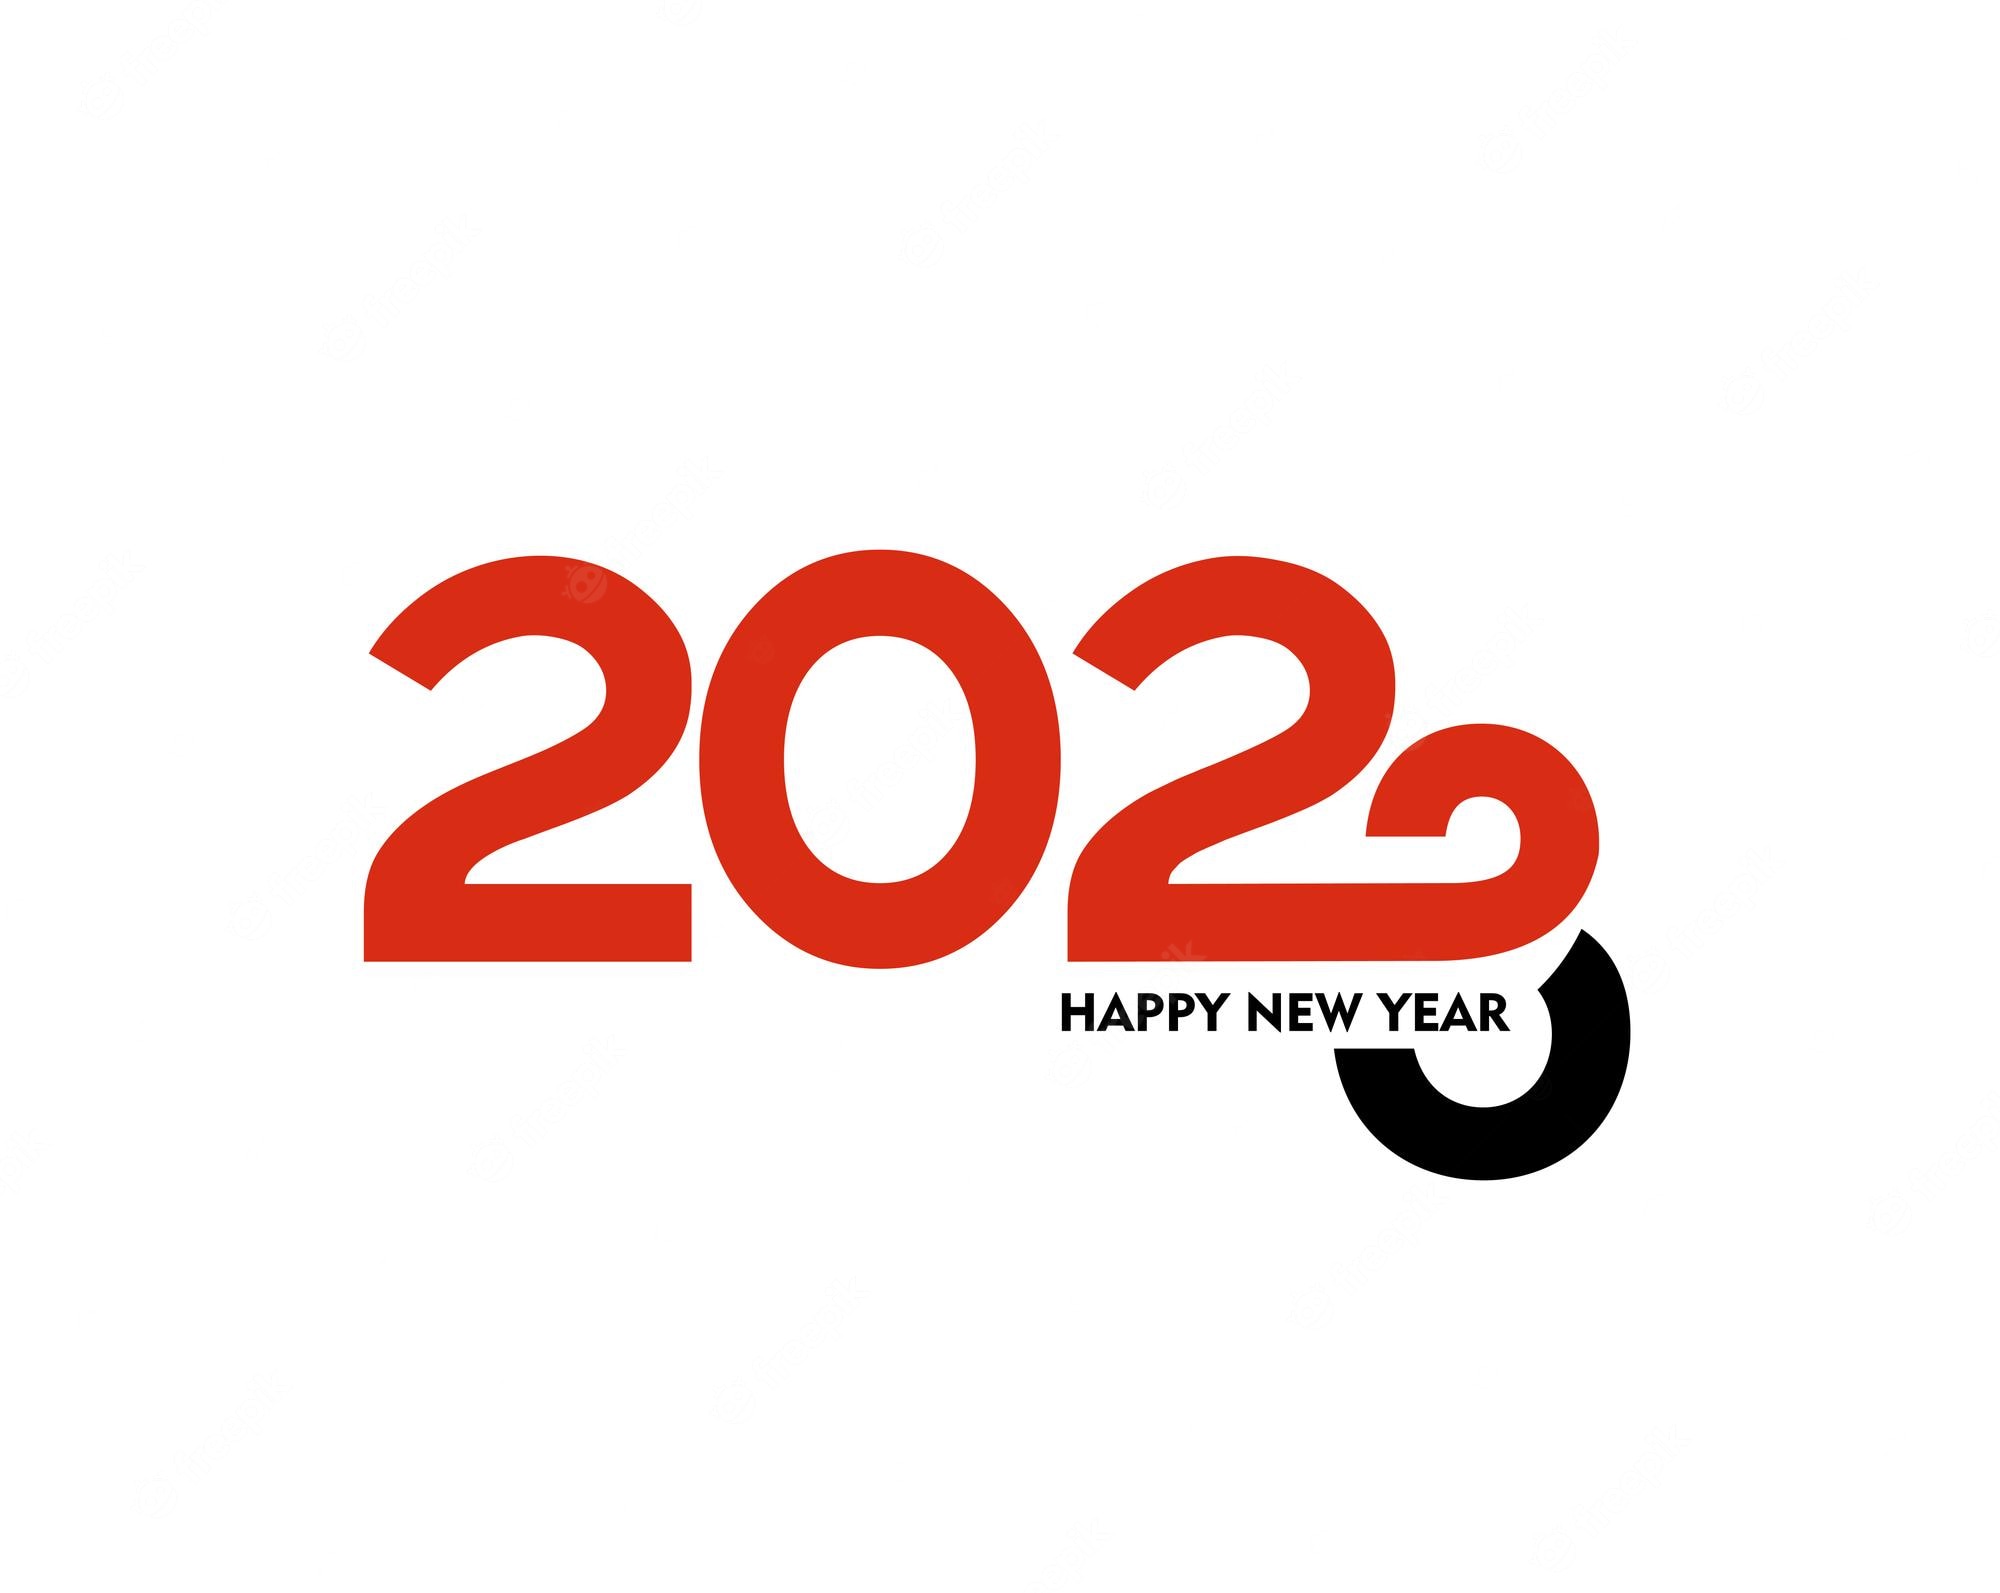 Happy new year 2022 Image. Free Vectors, & PSD